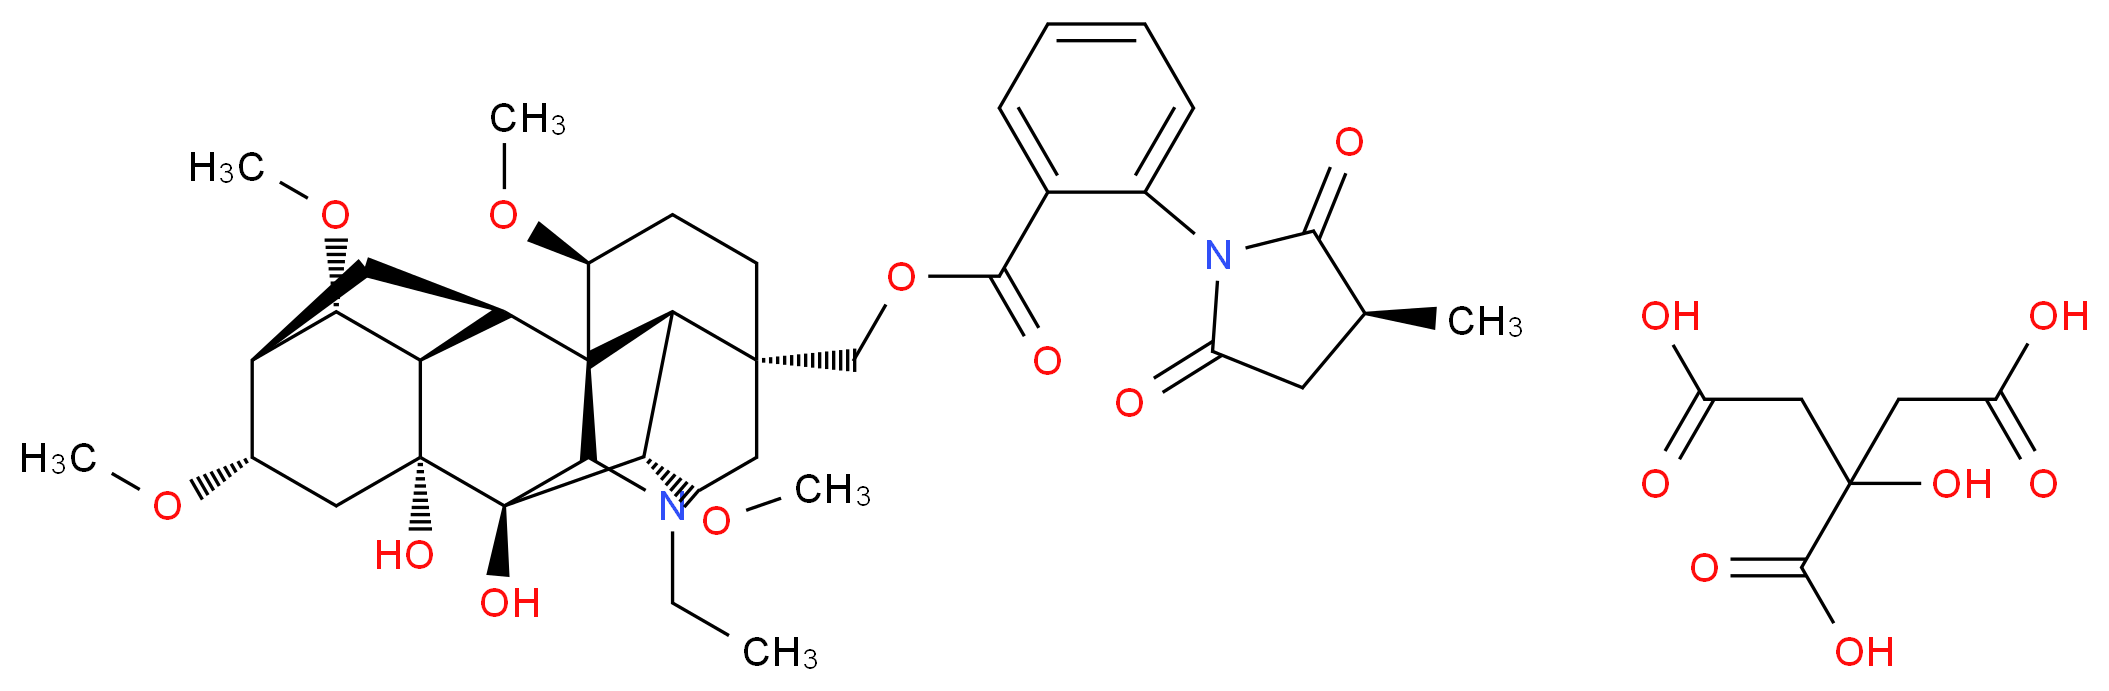 21019-30-7(freebase) molecular structure